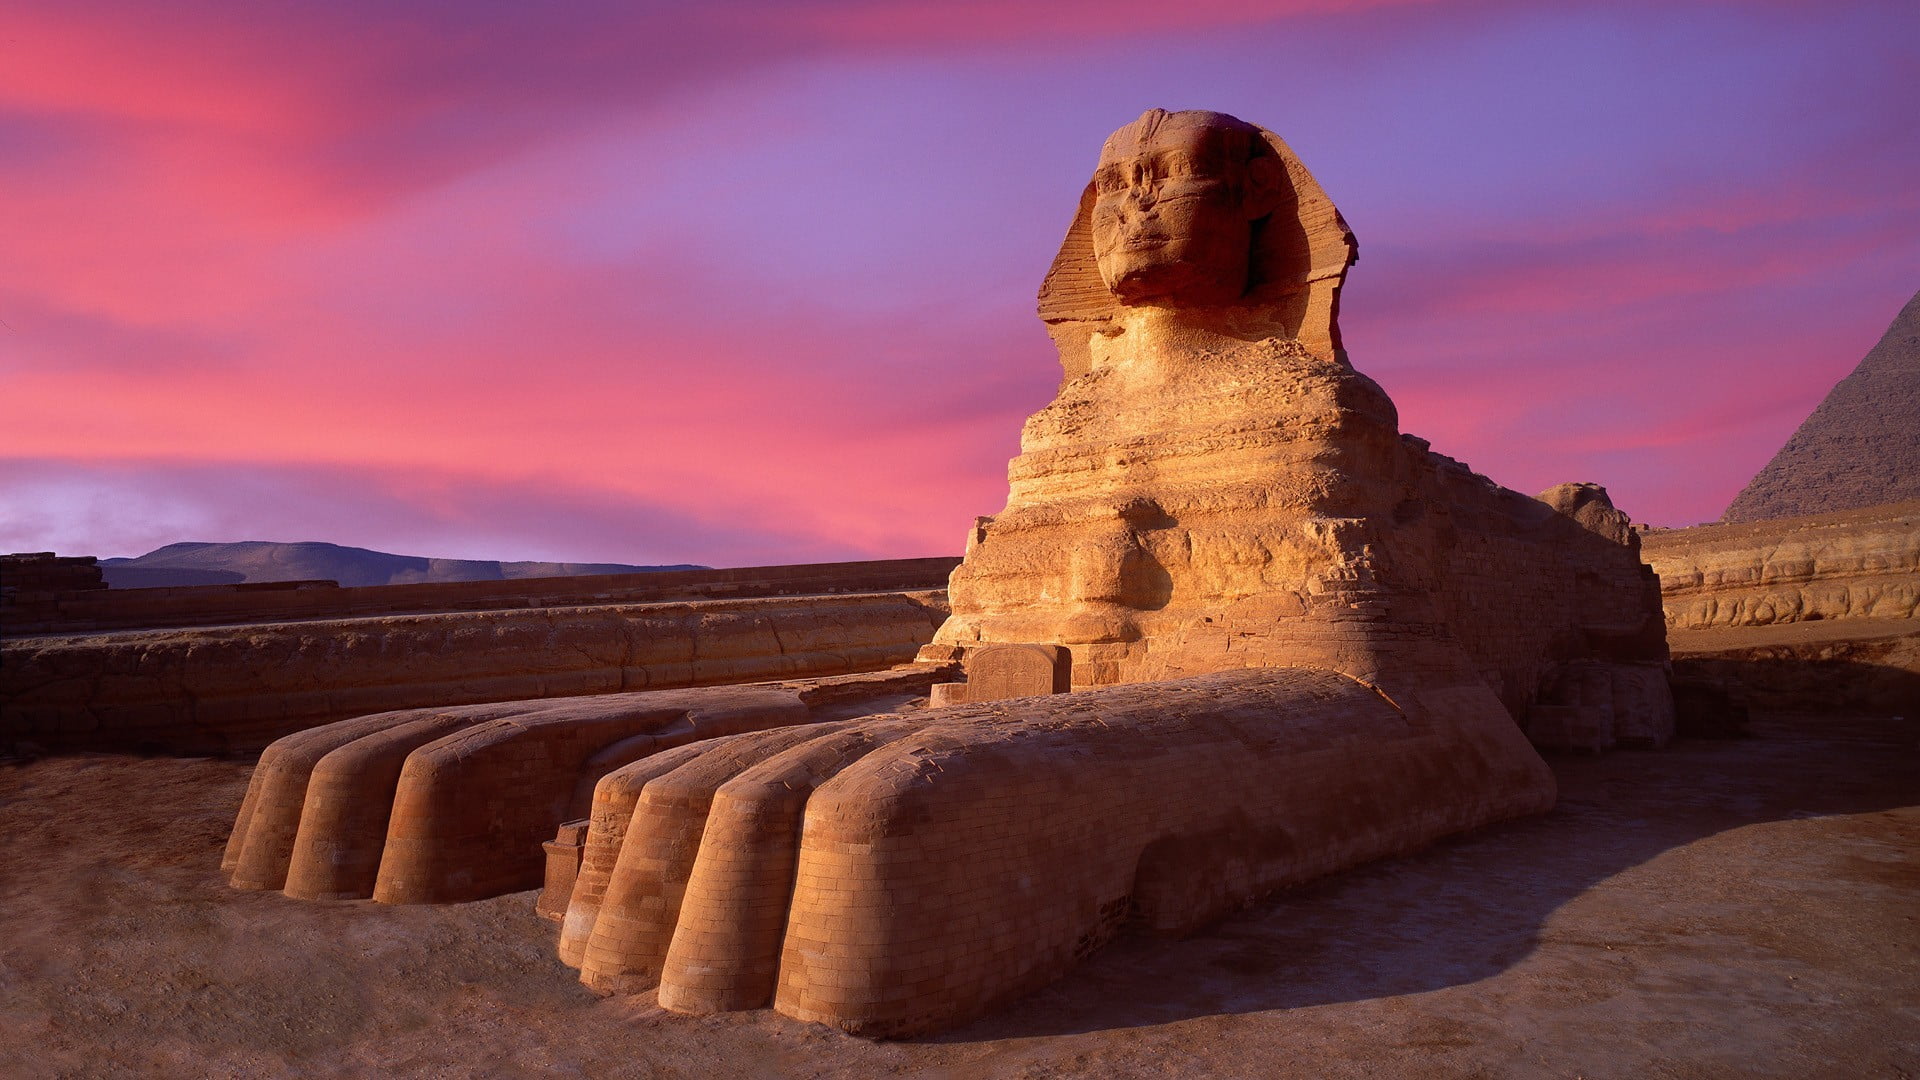 brown concrete Sphinx, Egypt, sunset, architecture, desert, sculpture